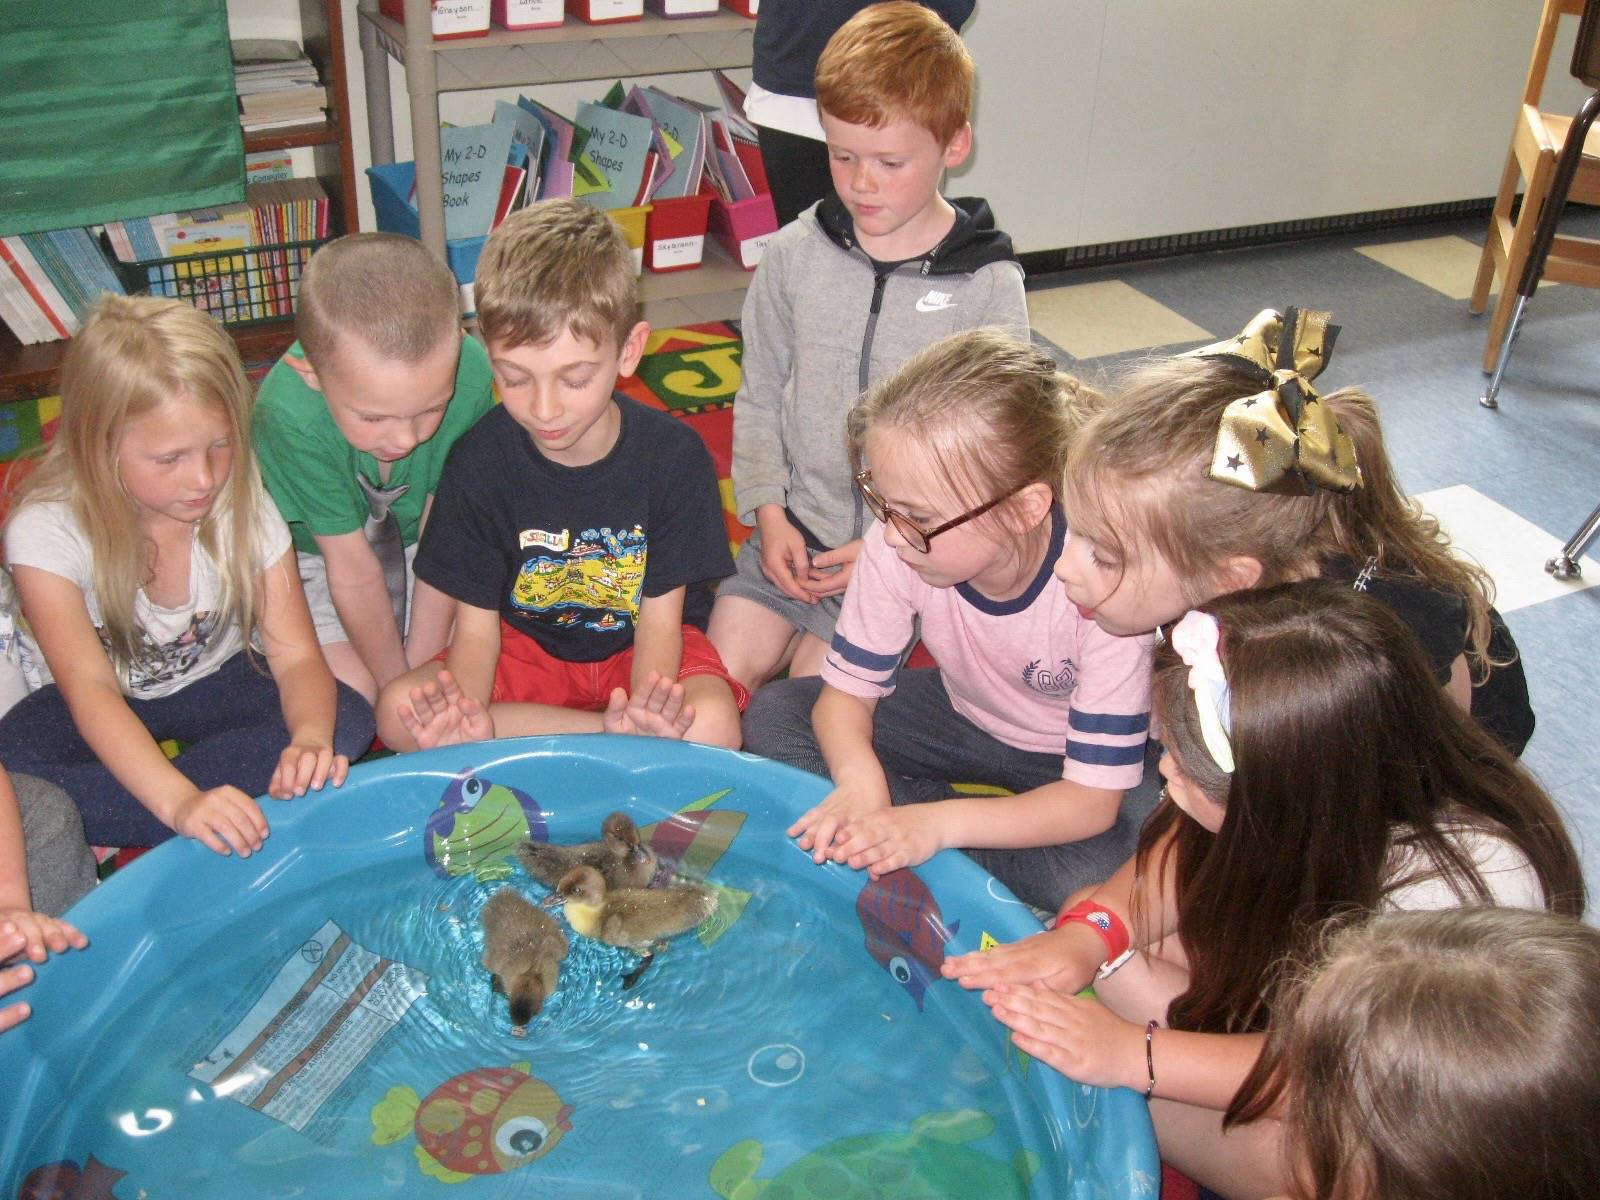 8 students watch ducklings swim in a pool.